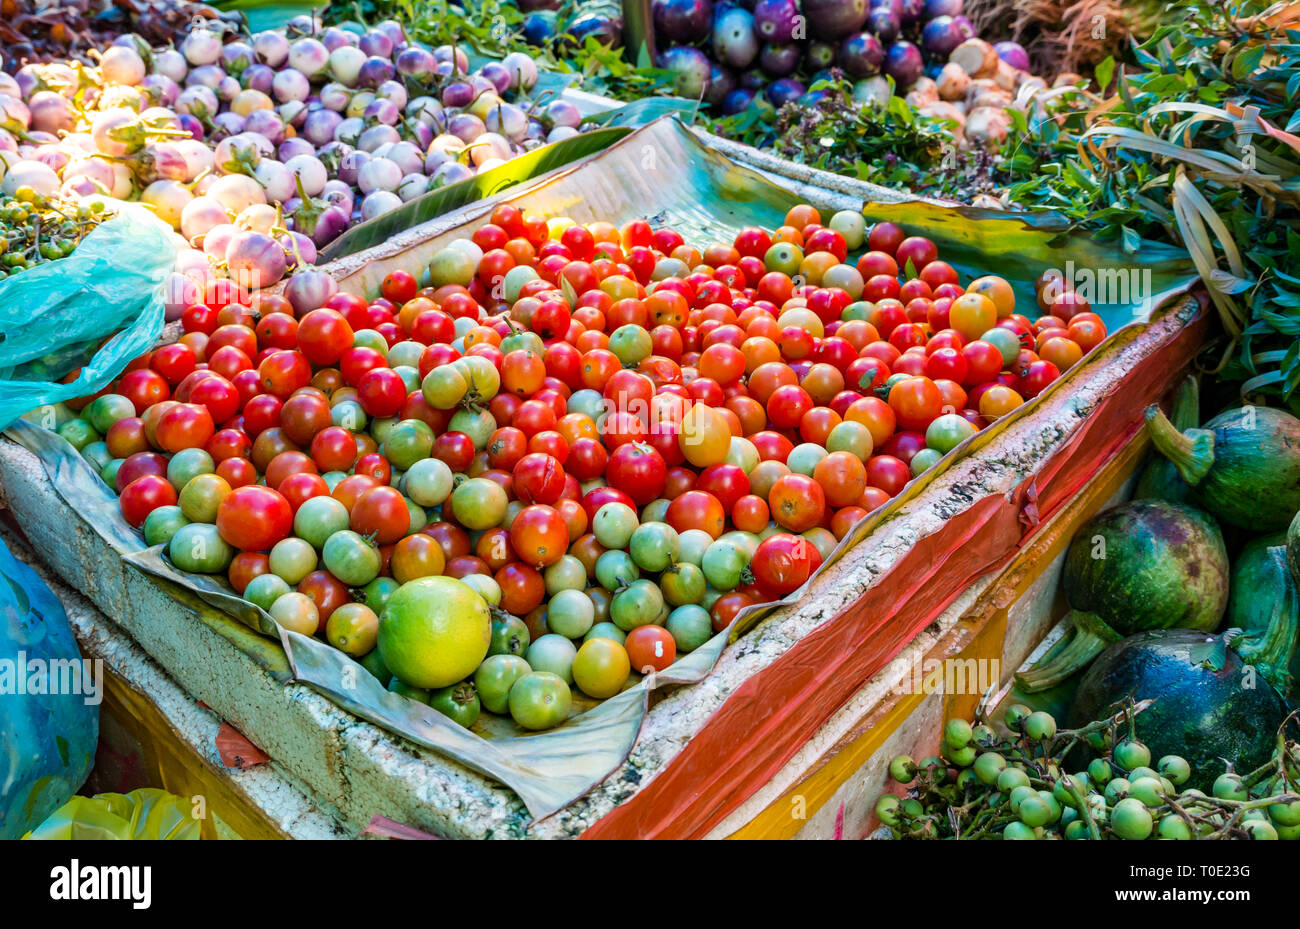 Vegetable display at market stall with cherry tomatoes, green pumpkins and shallots, Phosy day market, Luang Prabang, Laos, SE Asia Stock Photo